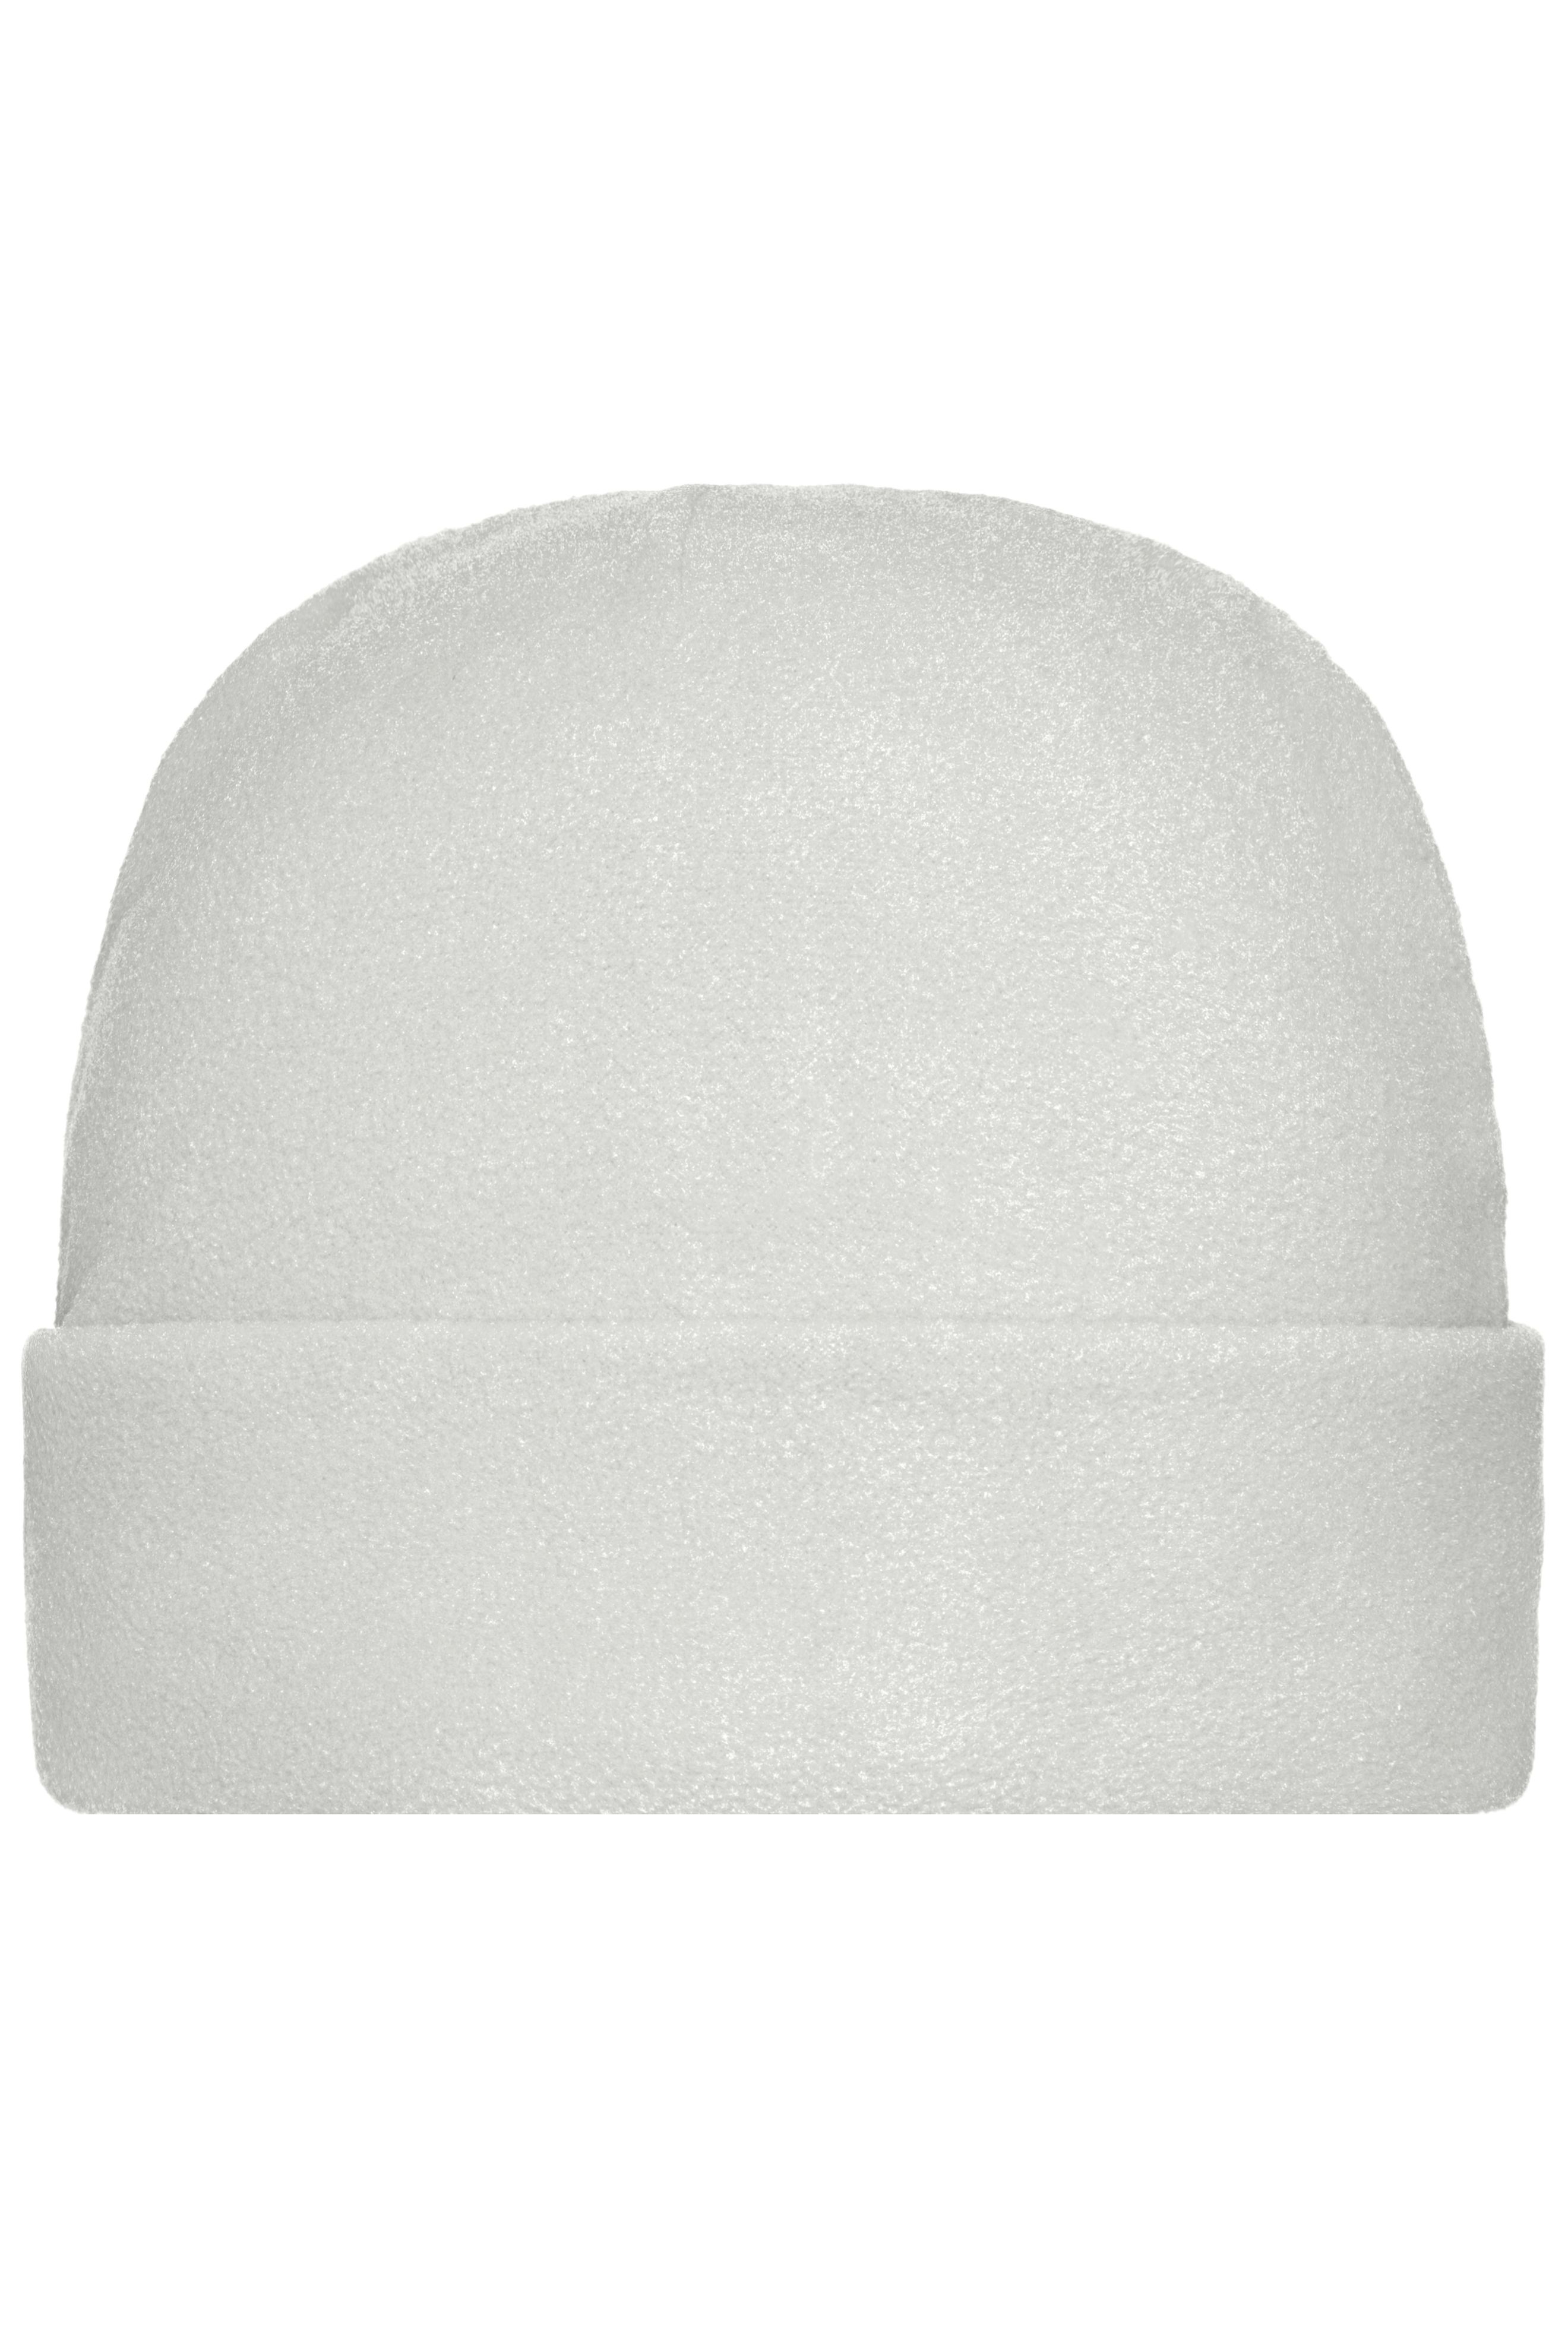 Microfleece Cap MB7720 Wärmende Fleece Mütze mit breitem Umschlag